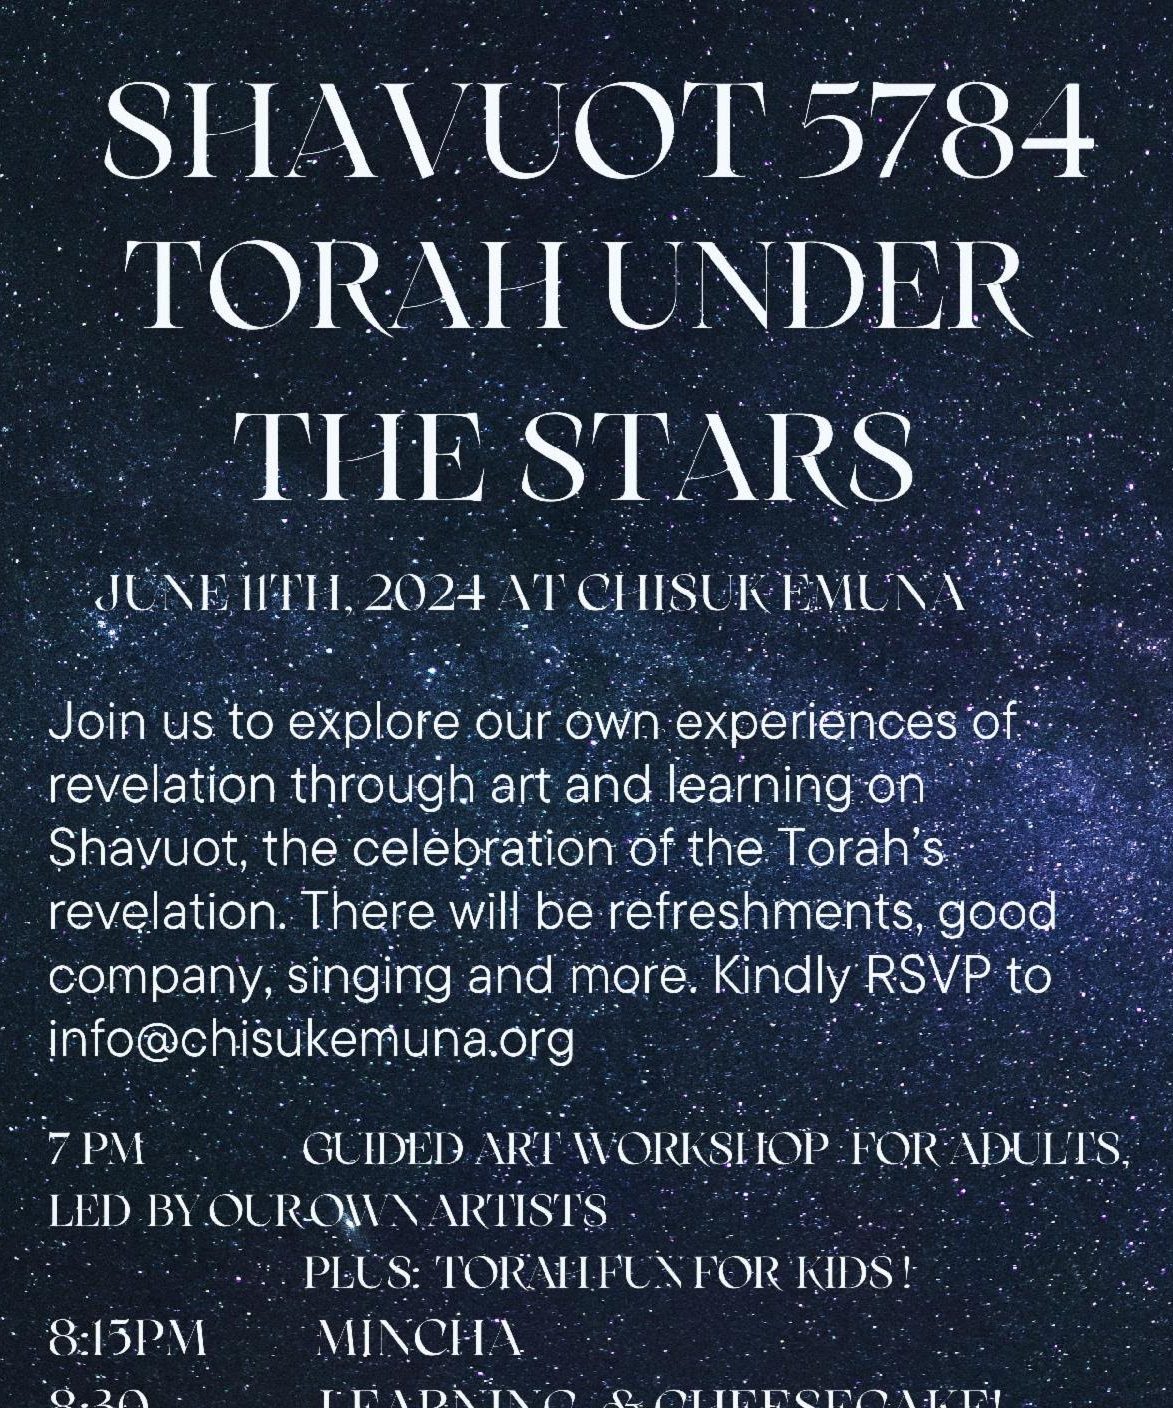 Shavuot 5784: Torah Under the Stars